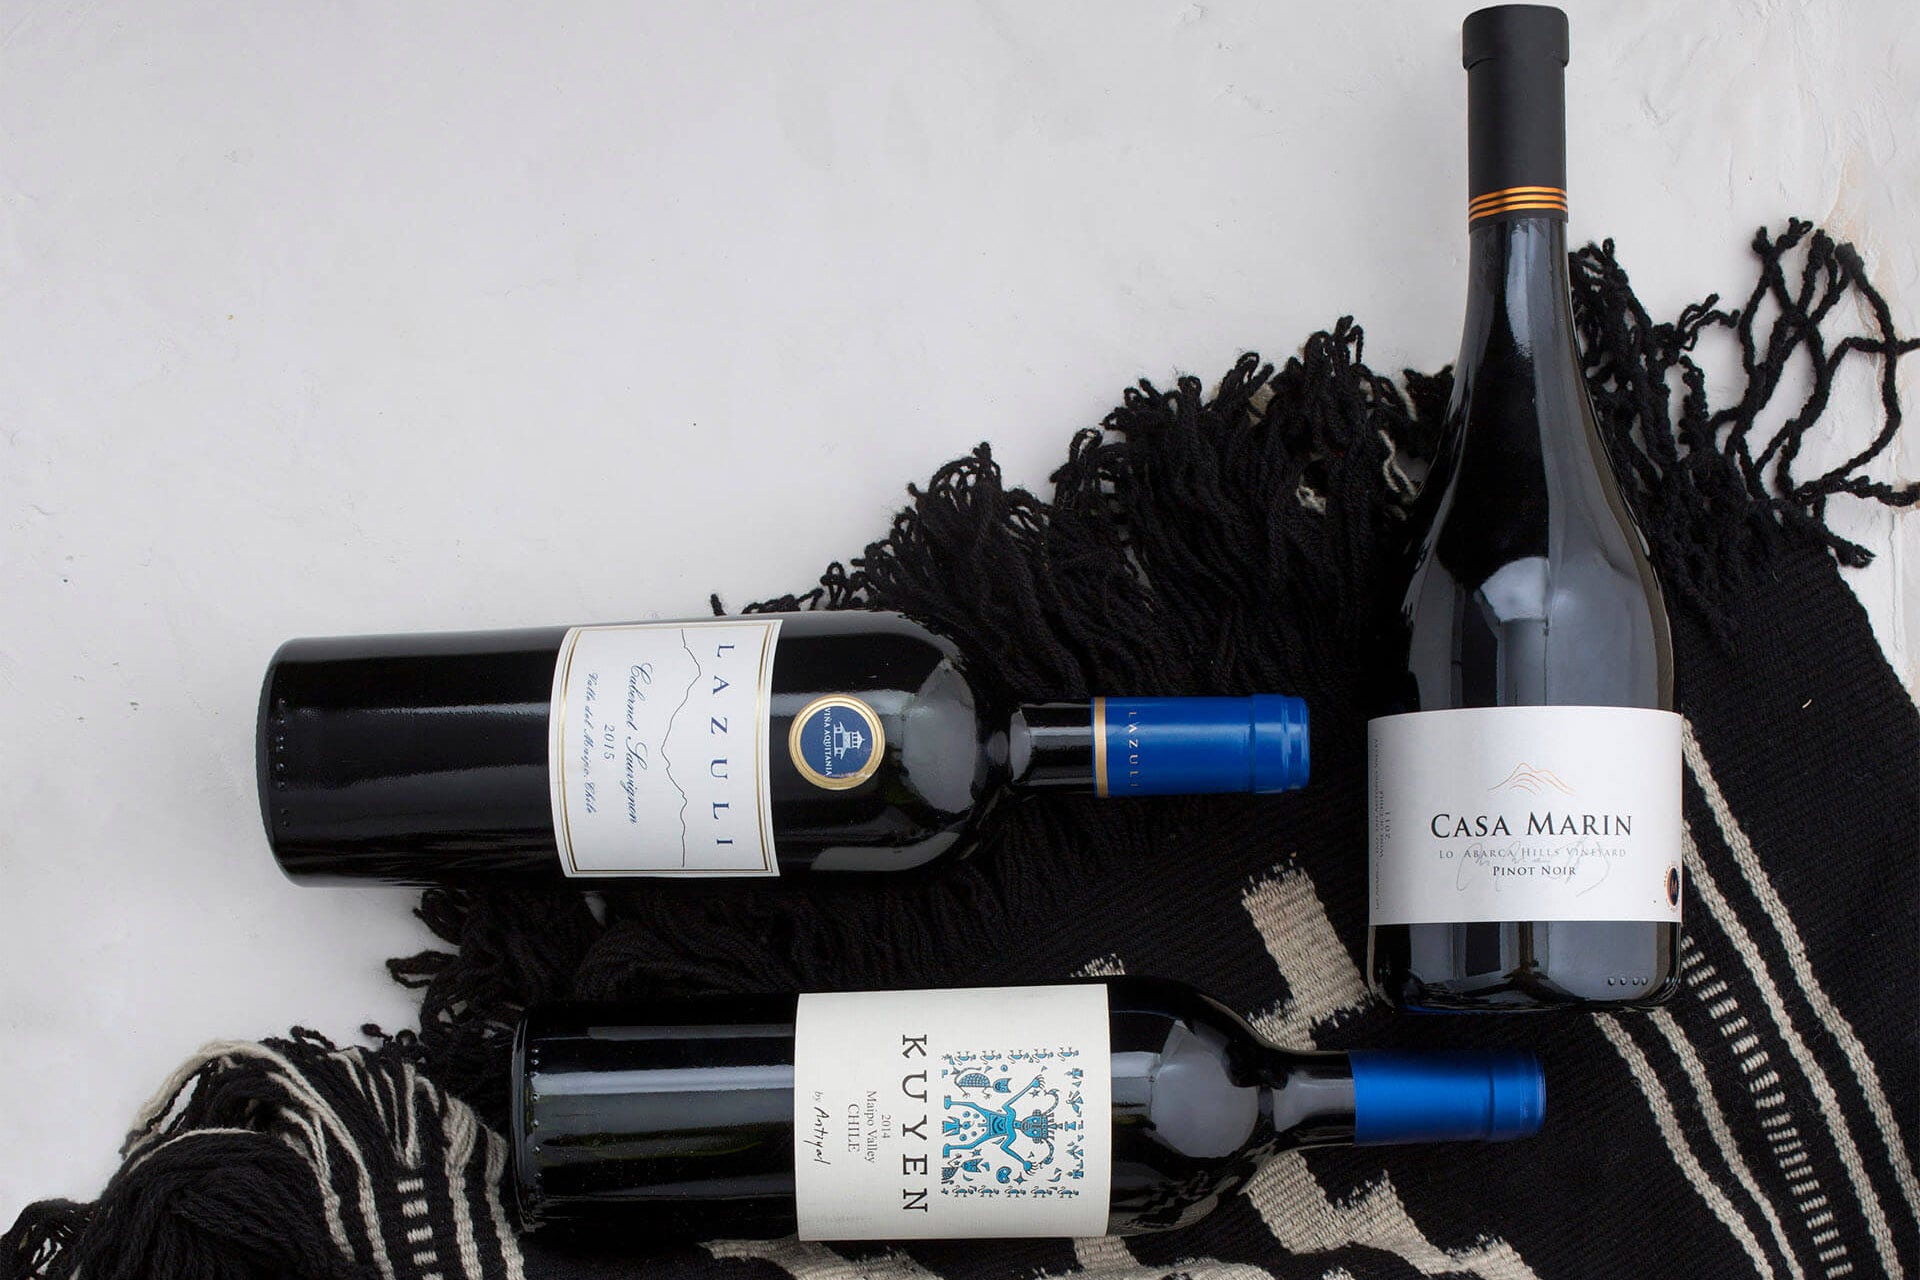 From left to right: Viña Aquitania 2015 Lazuli Cabernet Sauvignon; Antiyal 2014 Kuyen; Casa Marín 2011 Lo Abarca Hills Vineyard Pinot Noir.